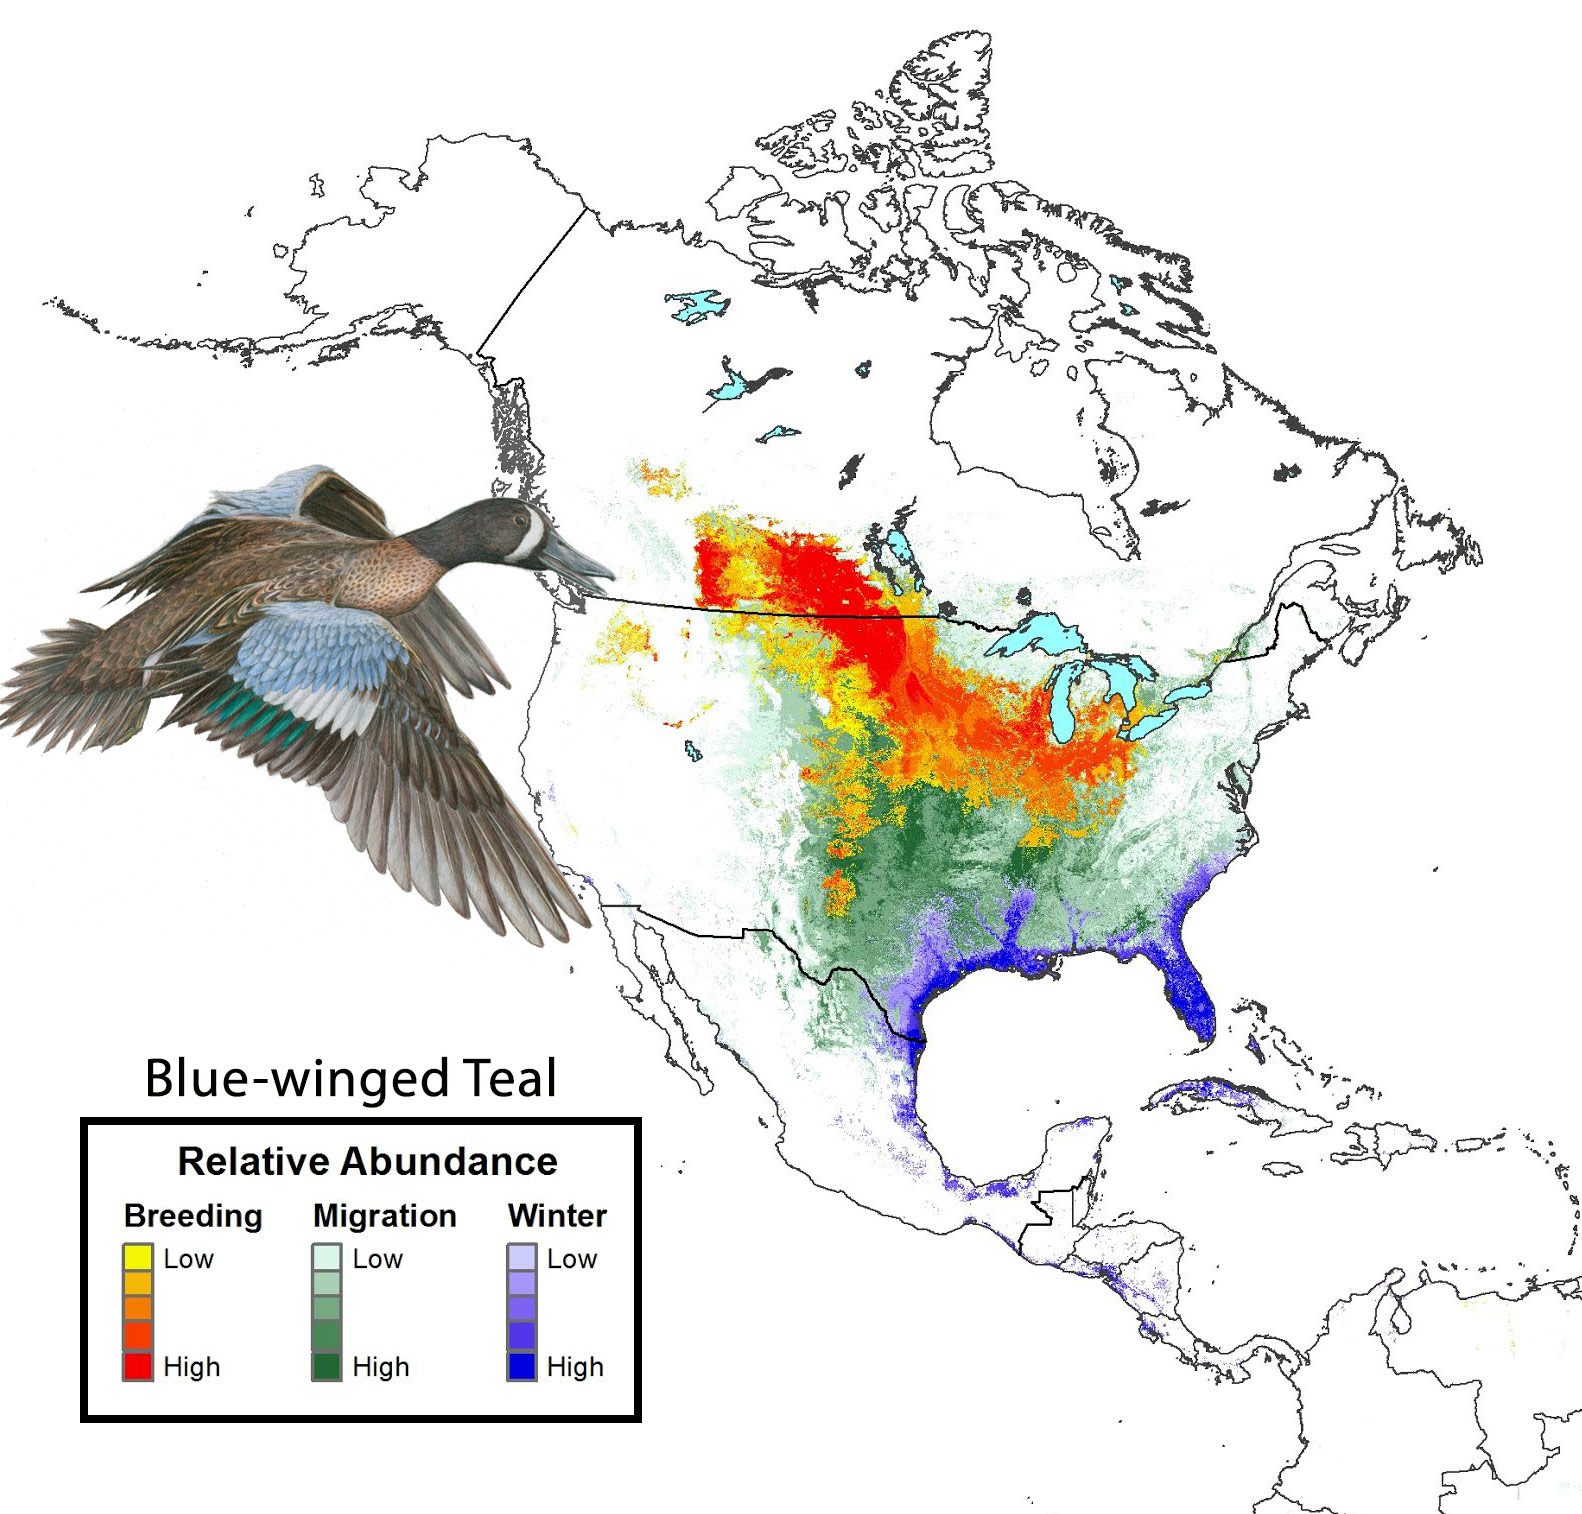 Blue-winged Teal species abundance map